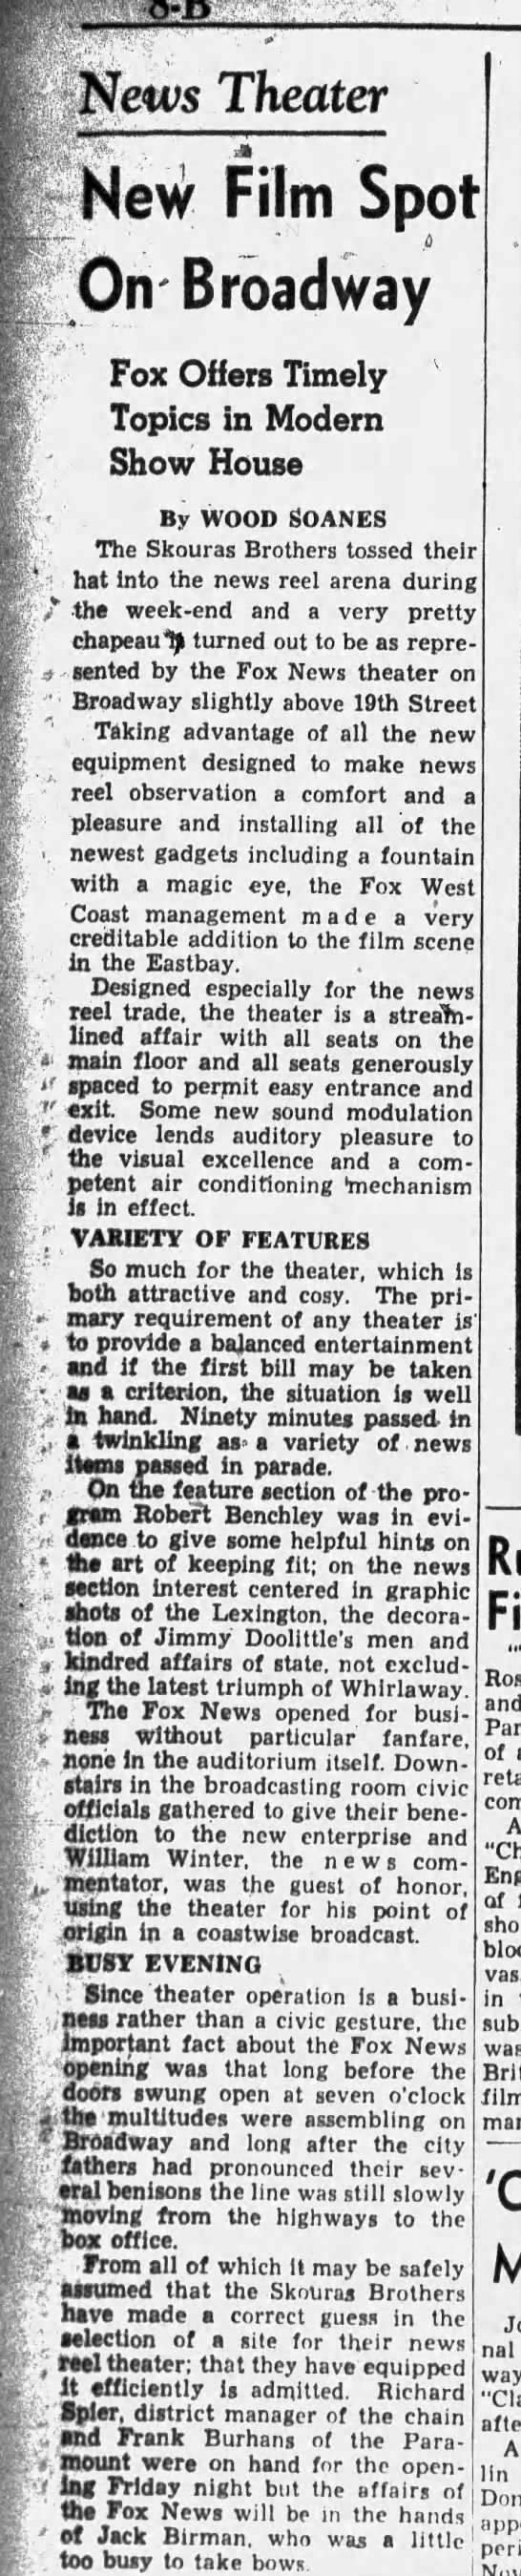 New Film Spot on Broadway - Oakland Tribune July 5, 1942 - 